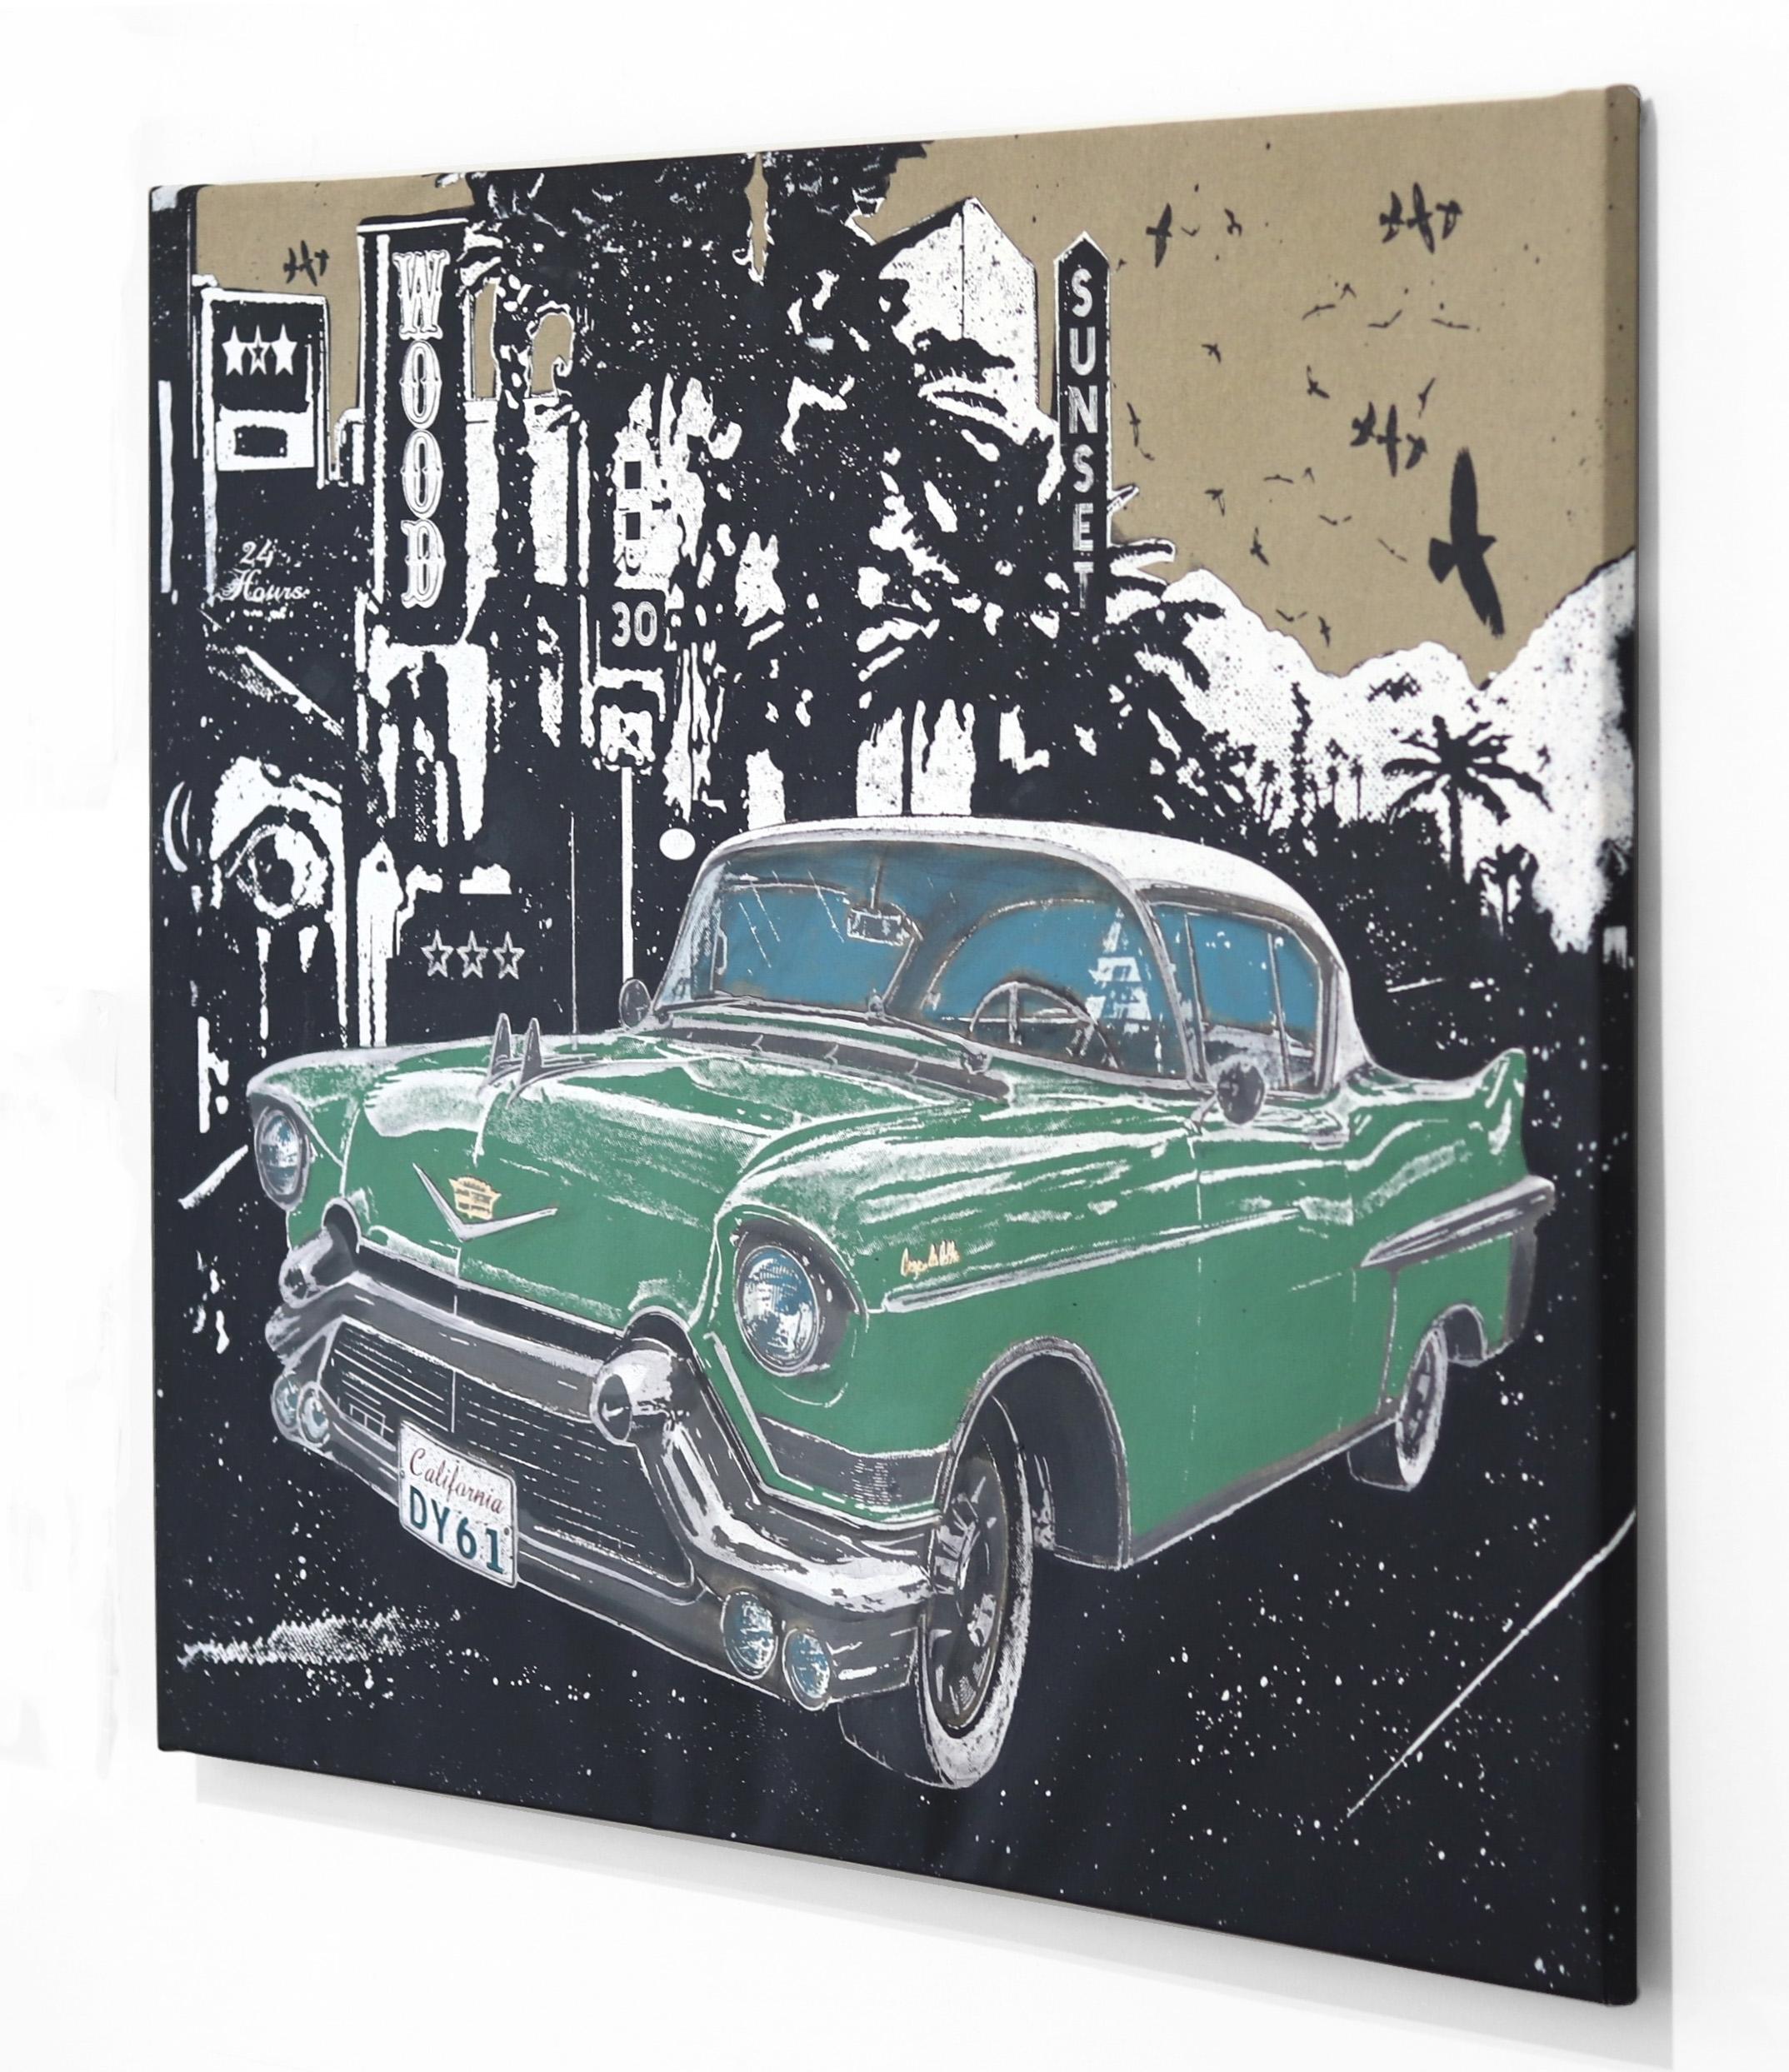 Riding High - Elvis Presley's Green Chevy California Cadillac Original Painting - Pop Art Mixed Media Art by Carl Smith